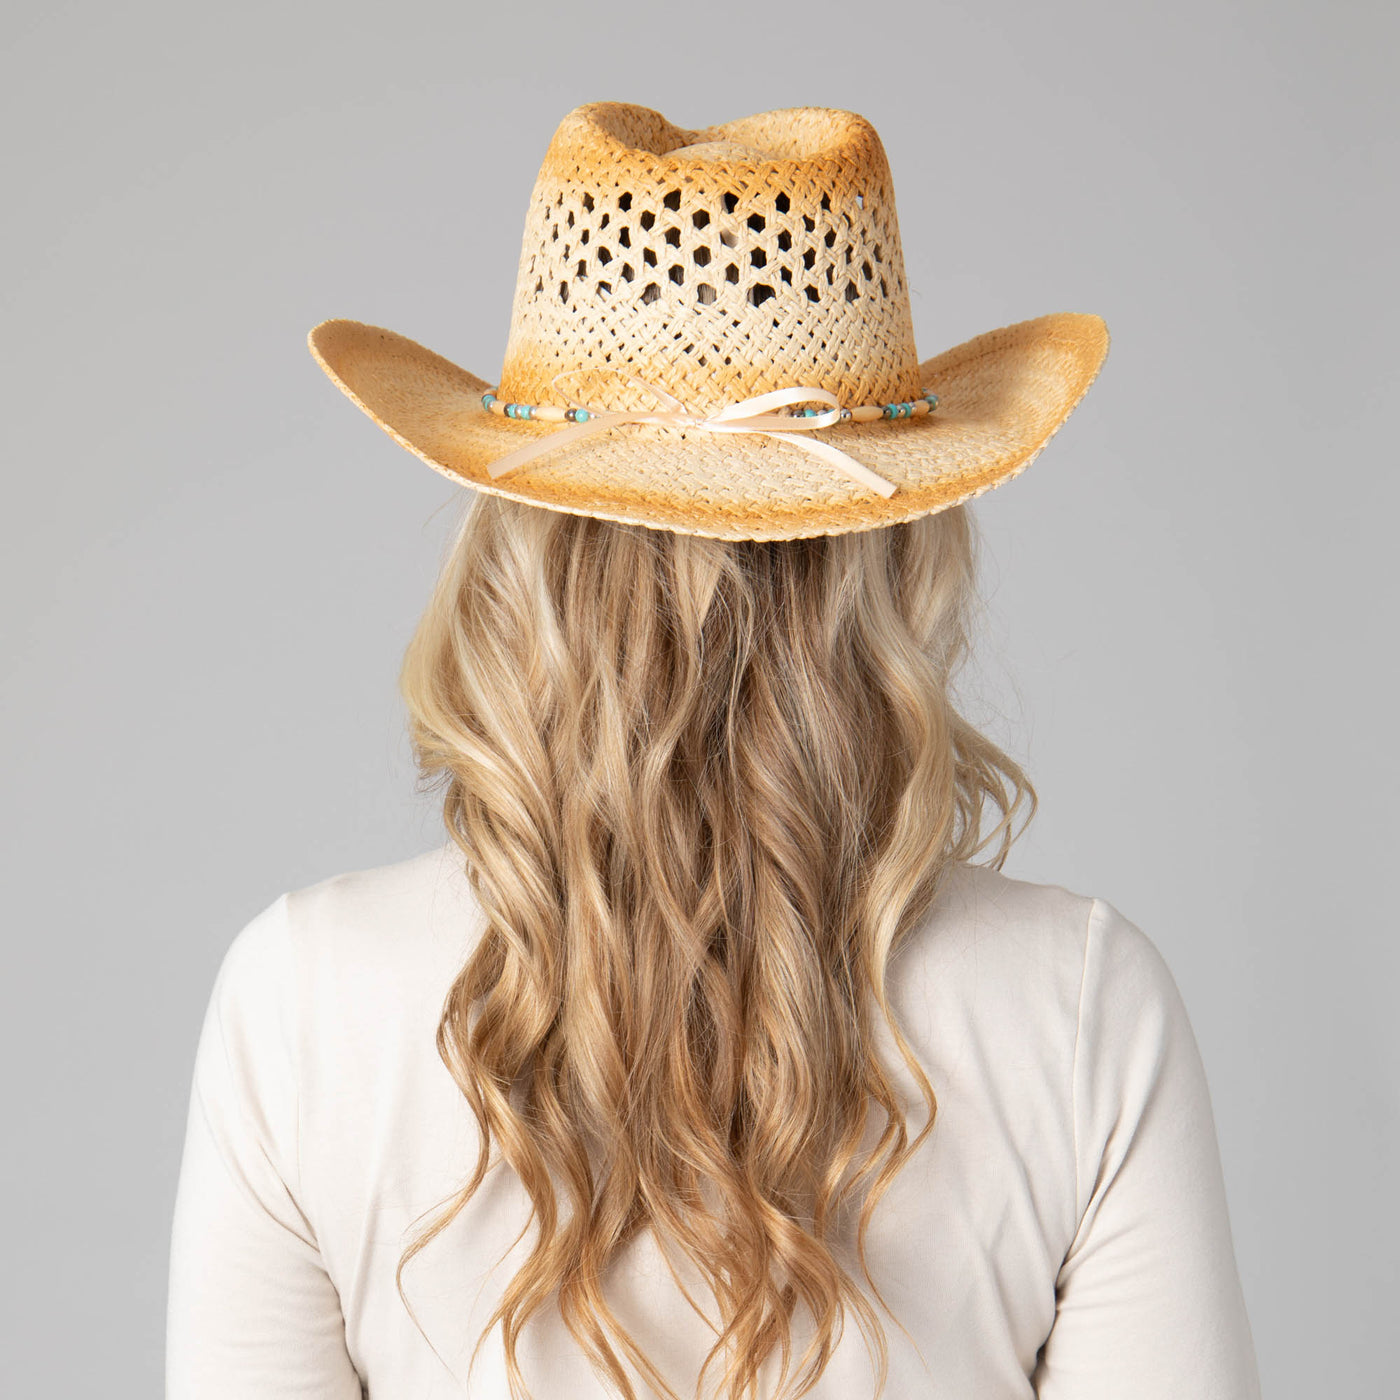 Kaia Women's Pinched Crown Cowboy-COWBOY-San Diego Hat Company